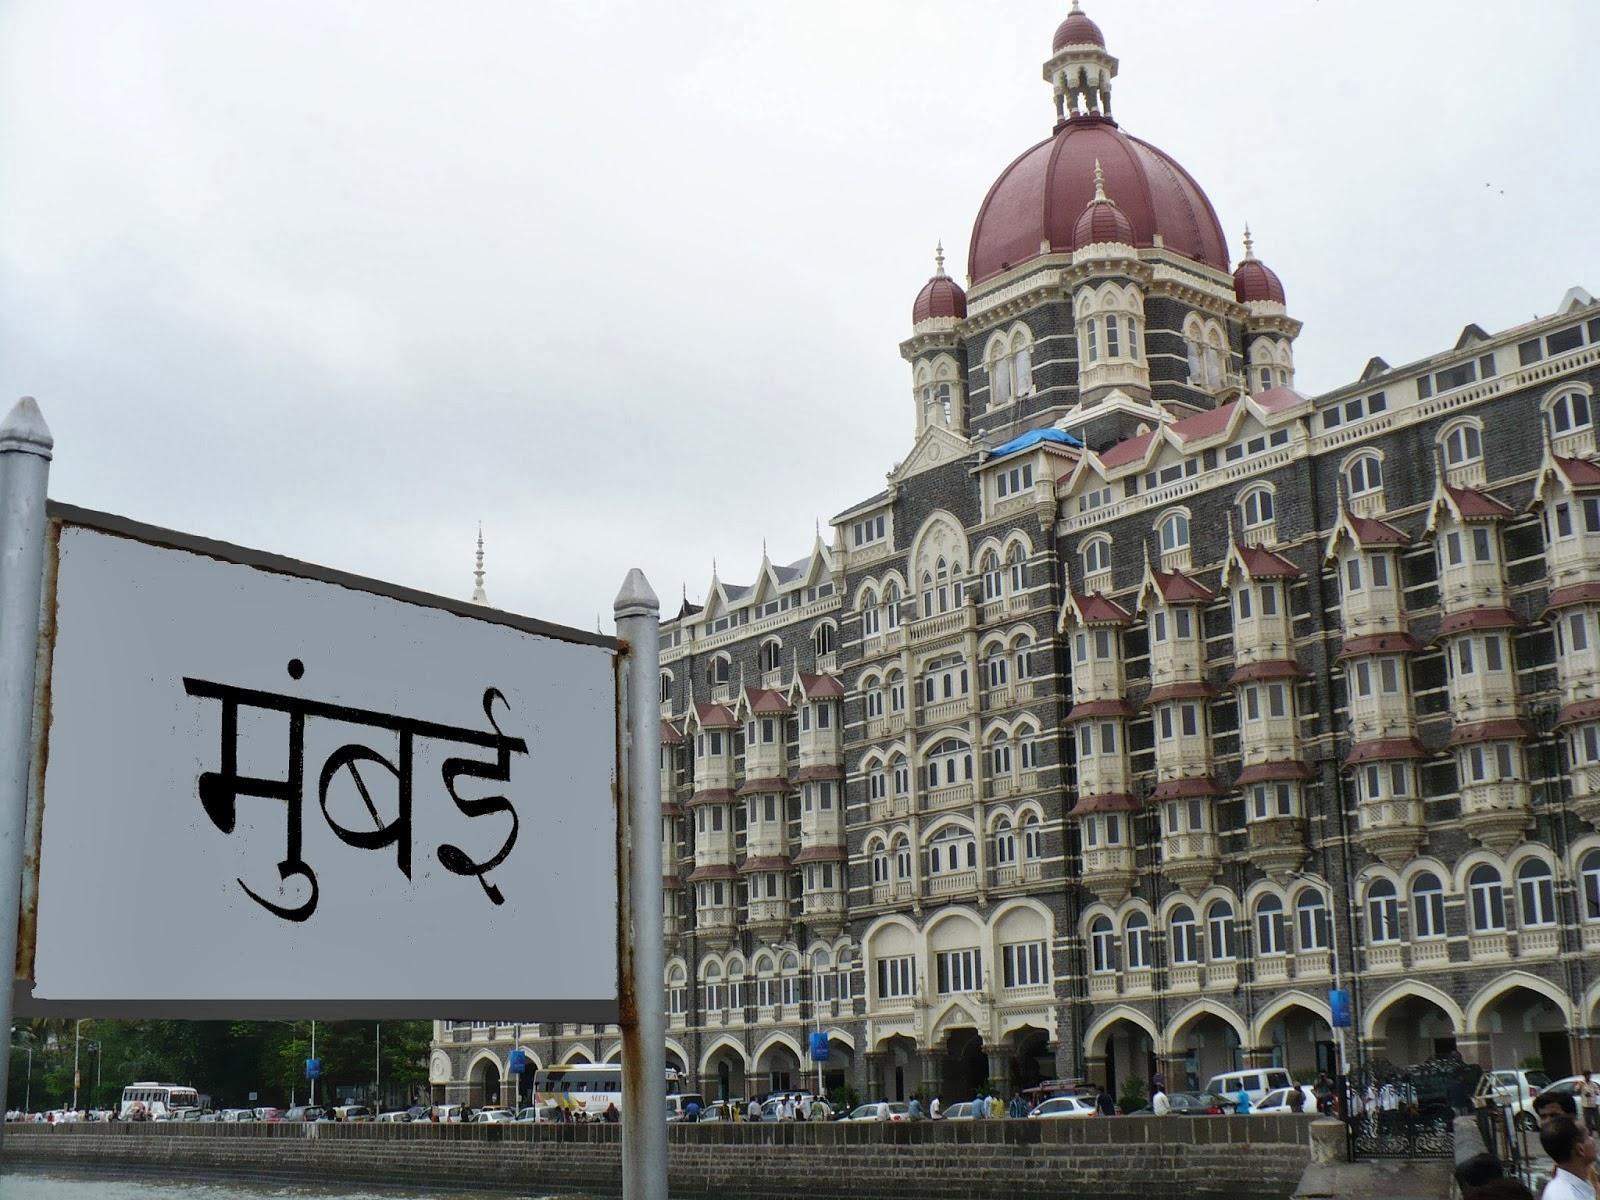 Mumbai Travel Guide: Everything you need to know about Mumbai